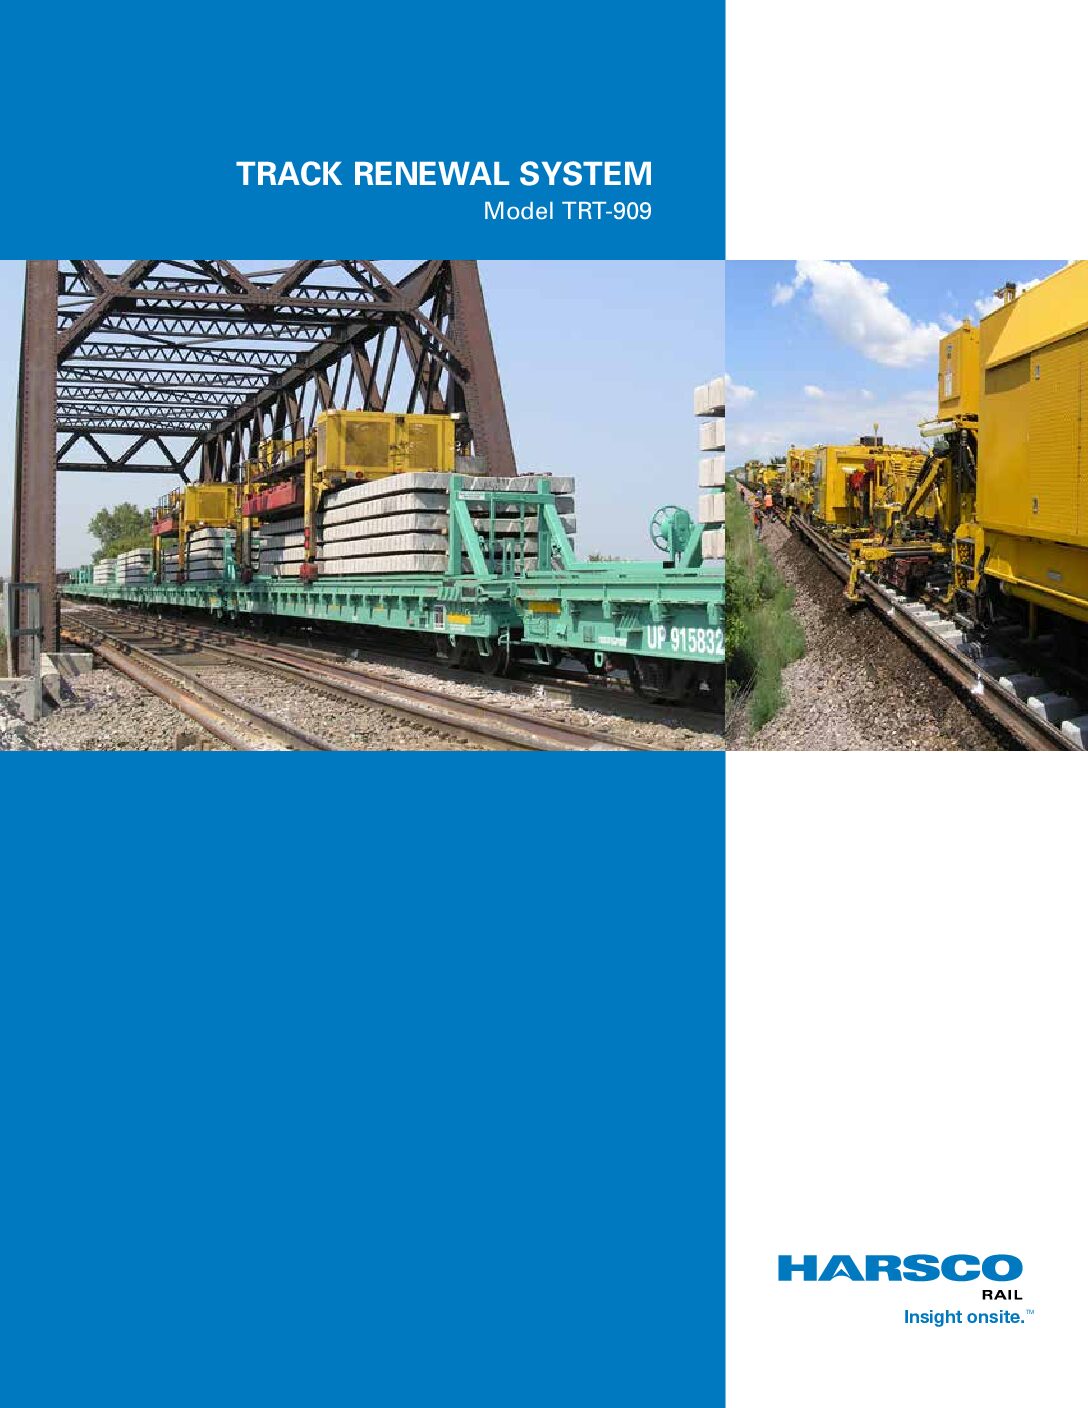 Track Renewal System: Model TRT-909